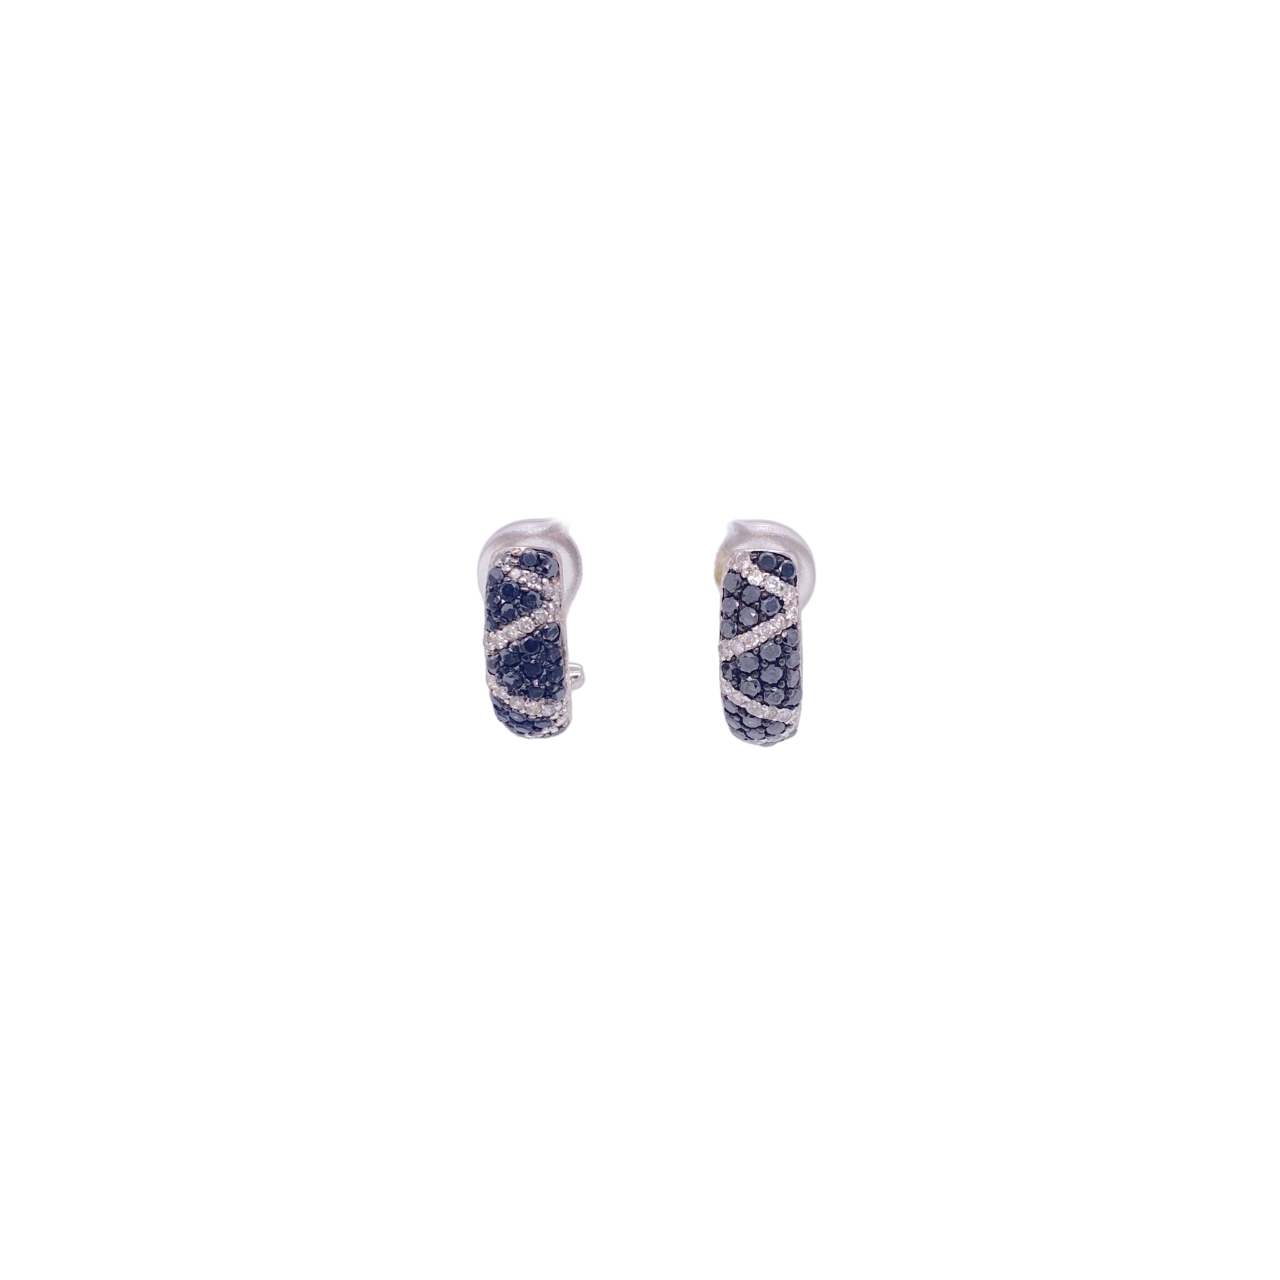 Black Diamond Earrings 14 Karat White Gold 1.24 Carats